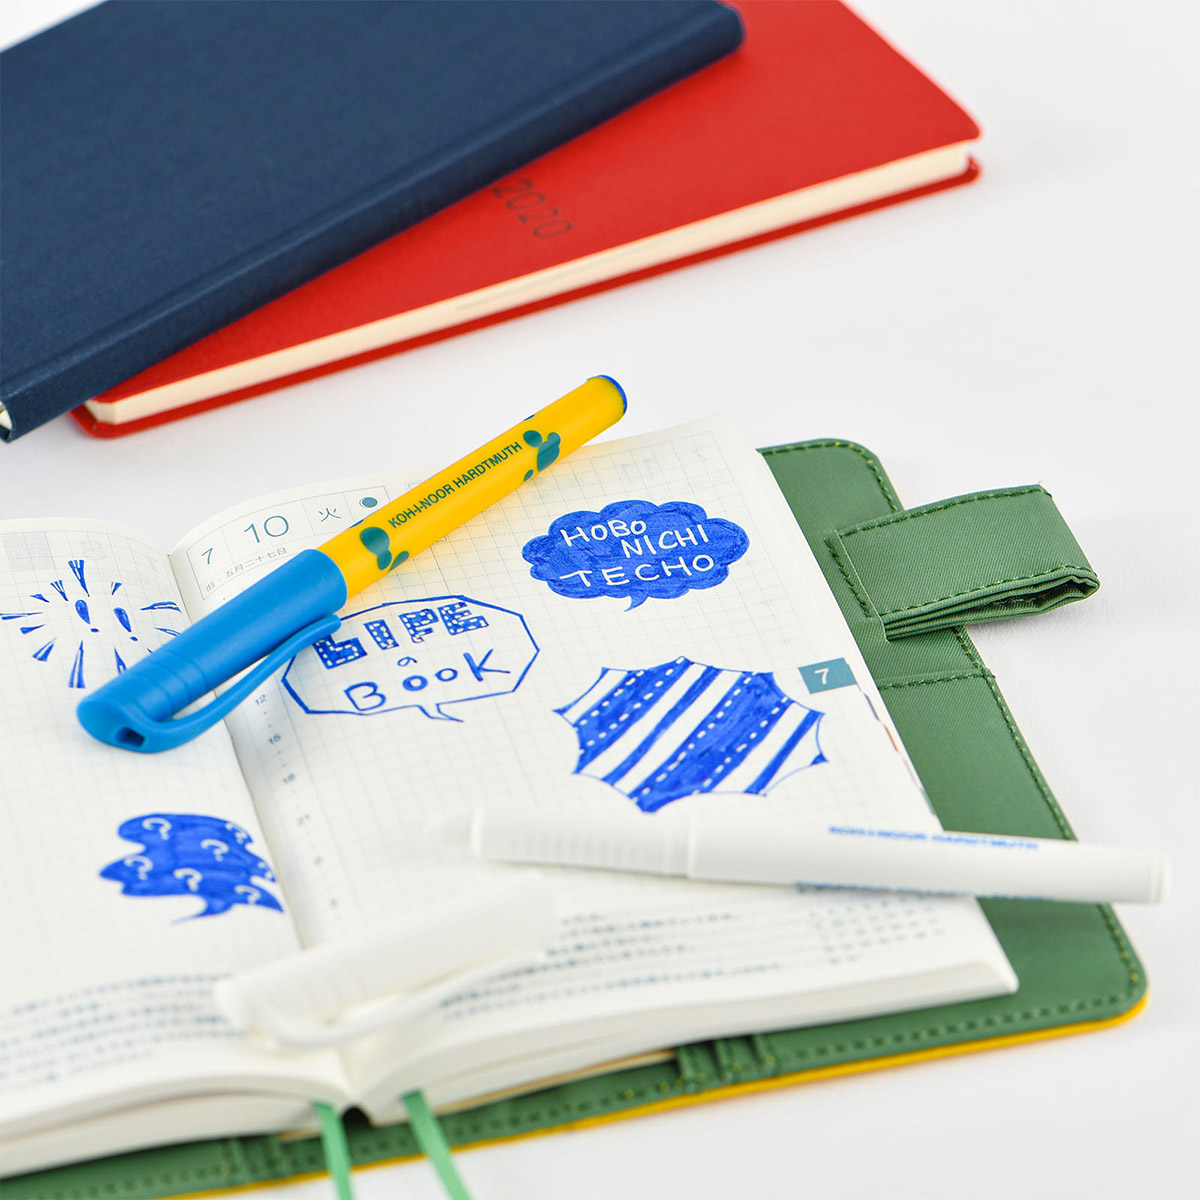 Hobonichi Techo Supplement, Dice, Writing Paper, Brush Pen, Eraser, Set Of